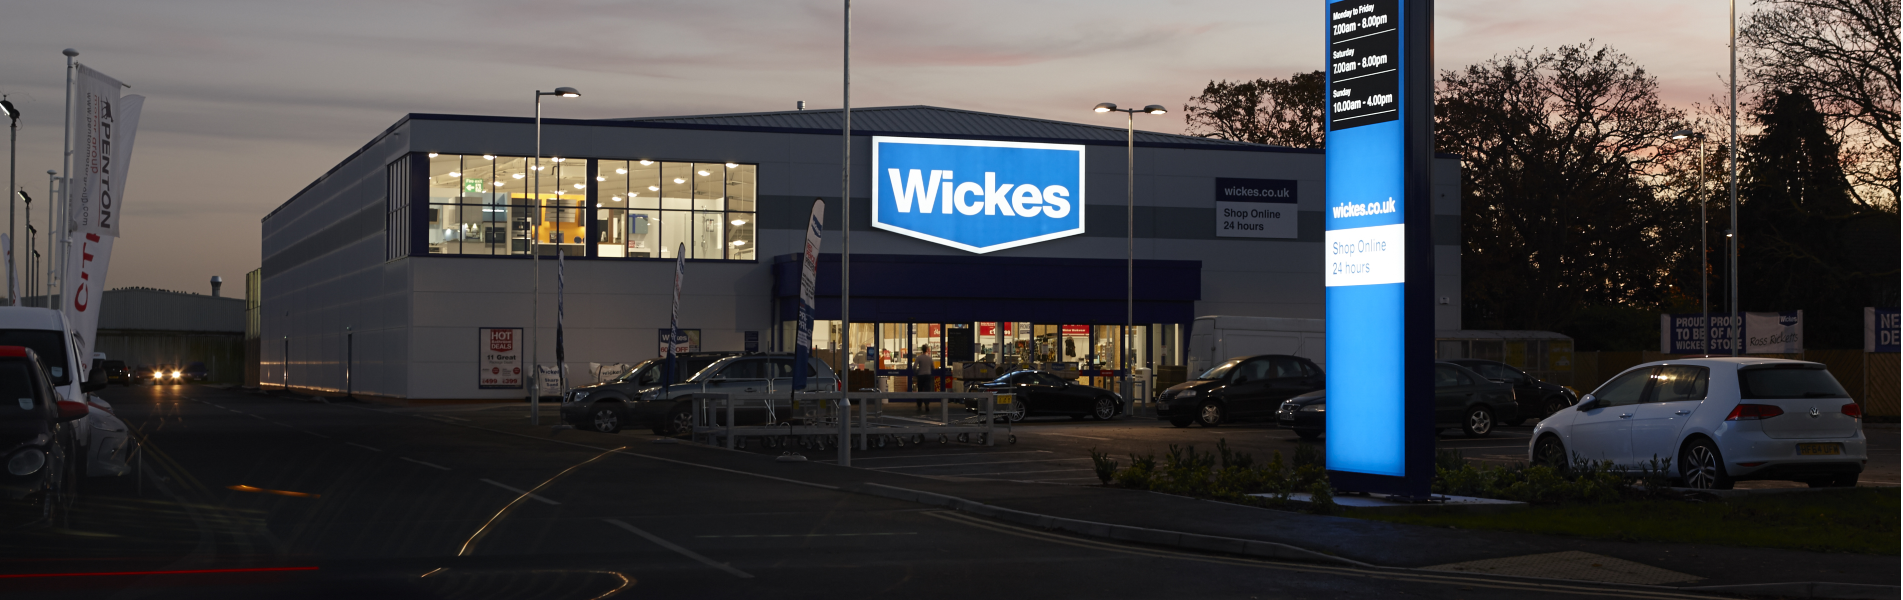 Wickes Watford store at dusk